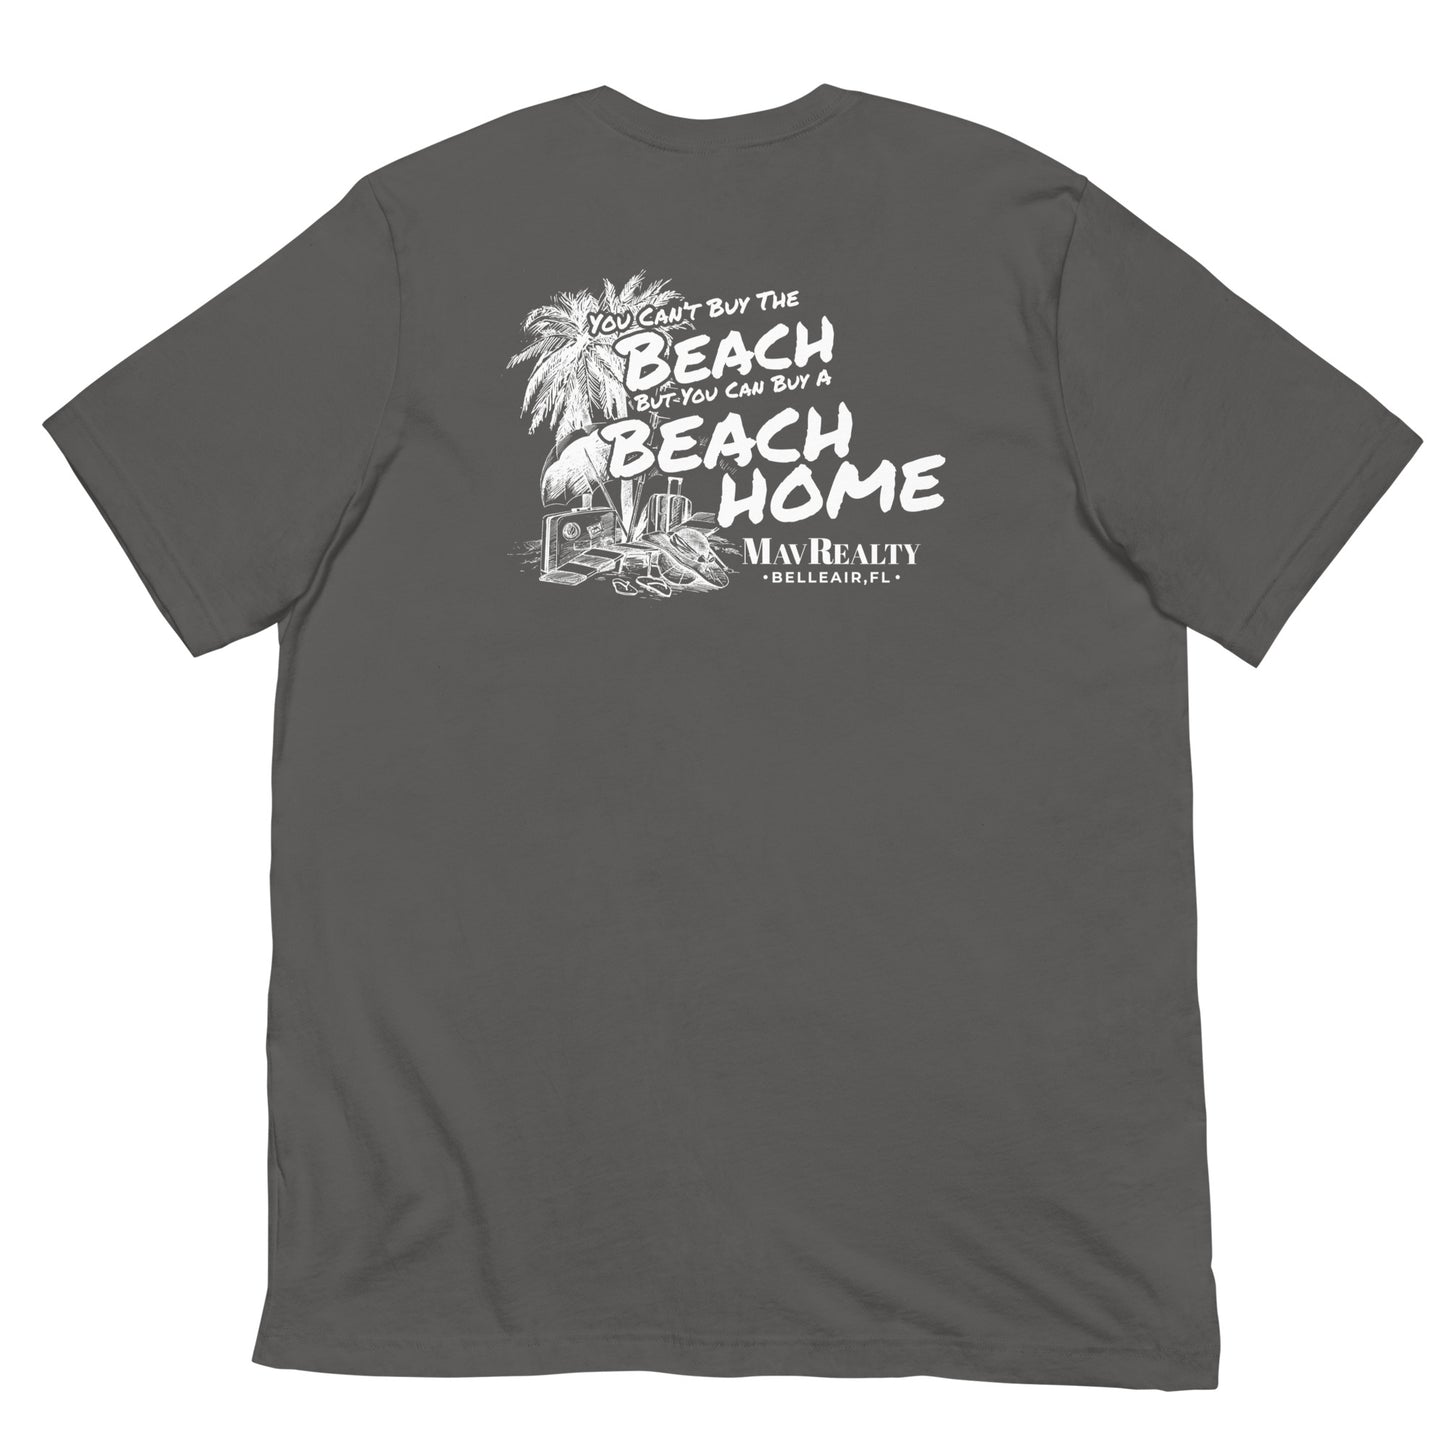 Buy The Beach Home